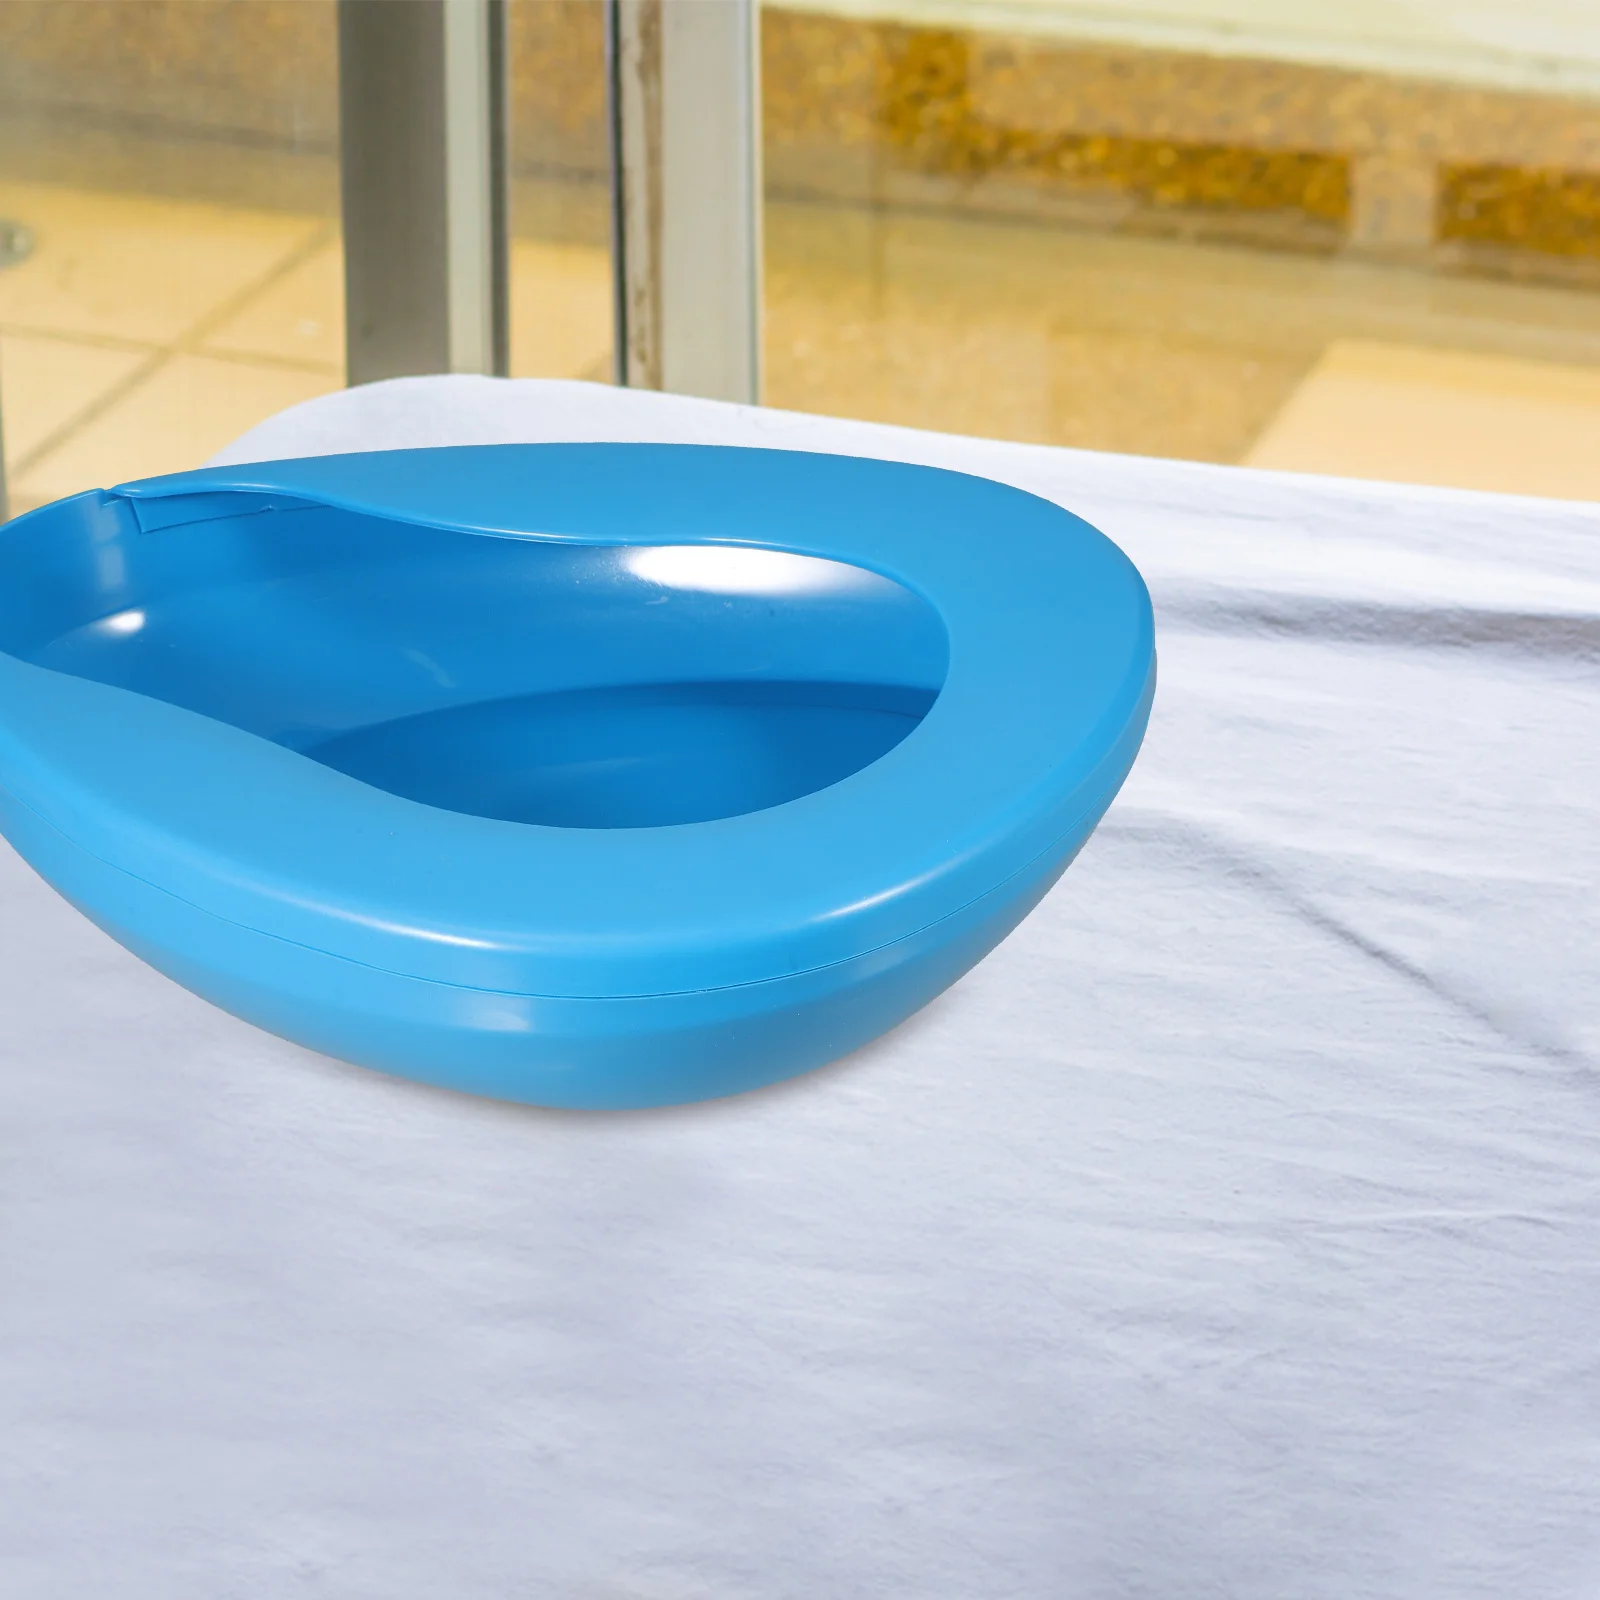 

Bedpan Bedpans Elderly Female Bedridden Patient Supply Portable Toilet Container Plastic Urinal Seat Potty